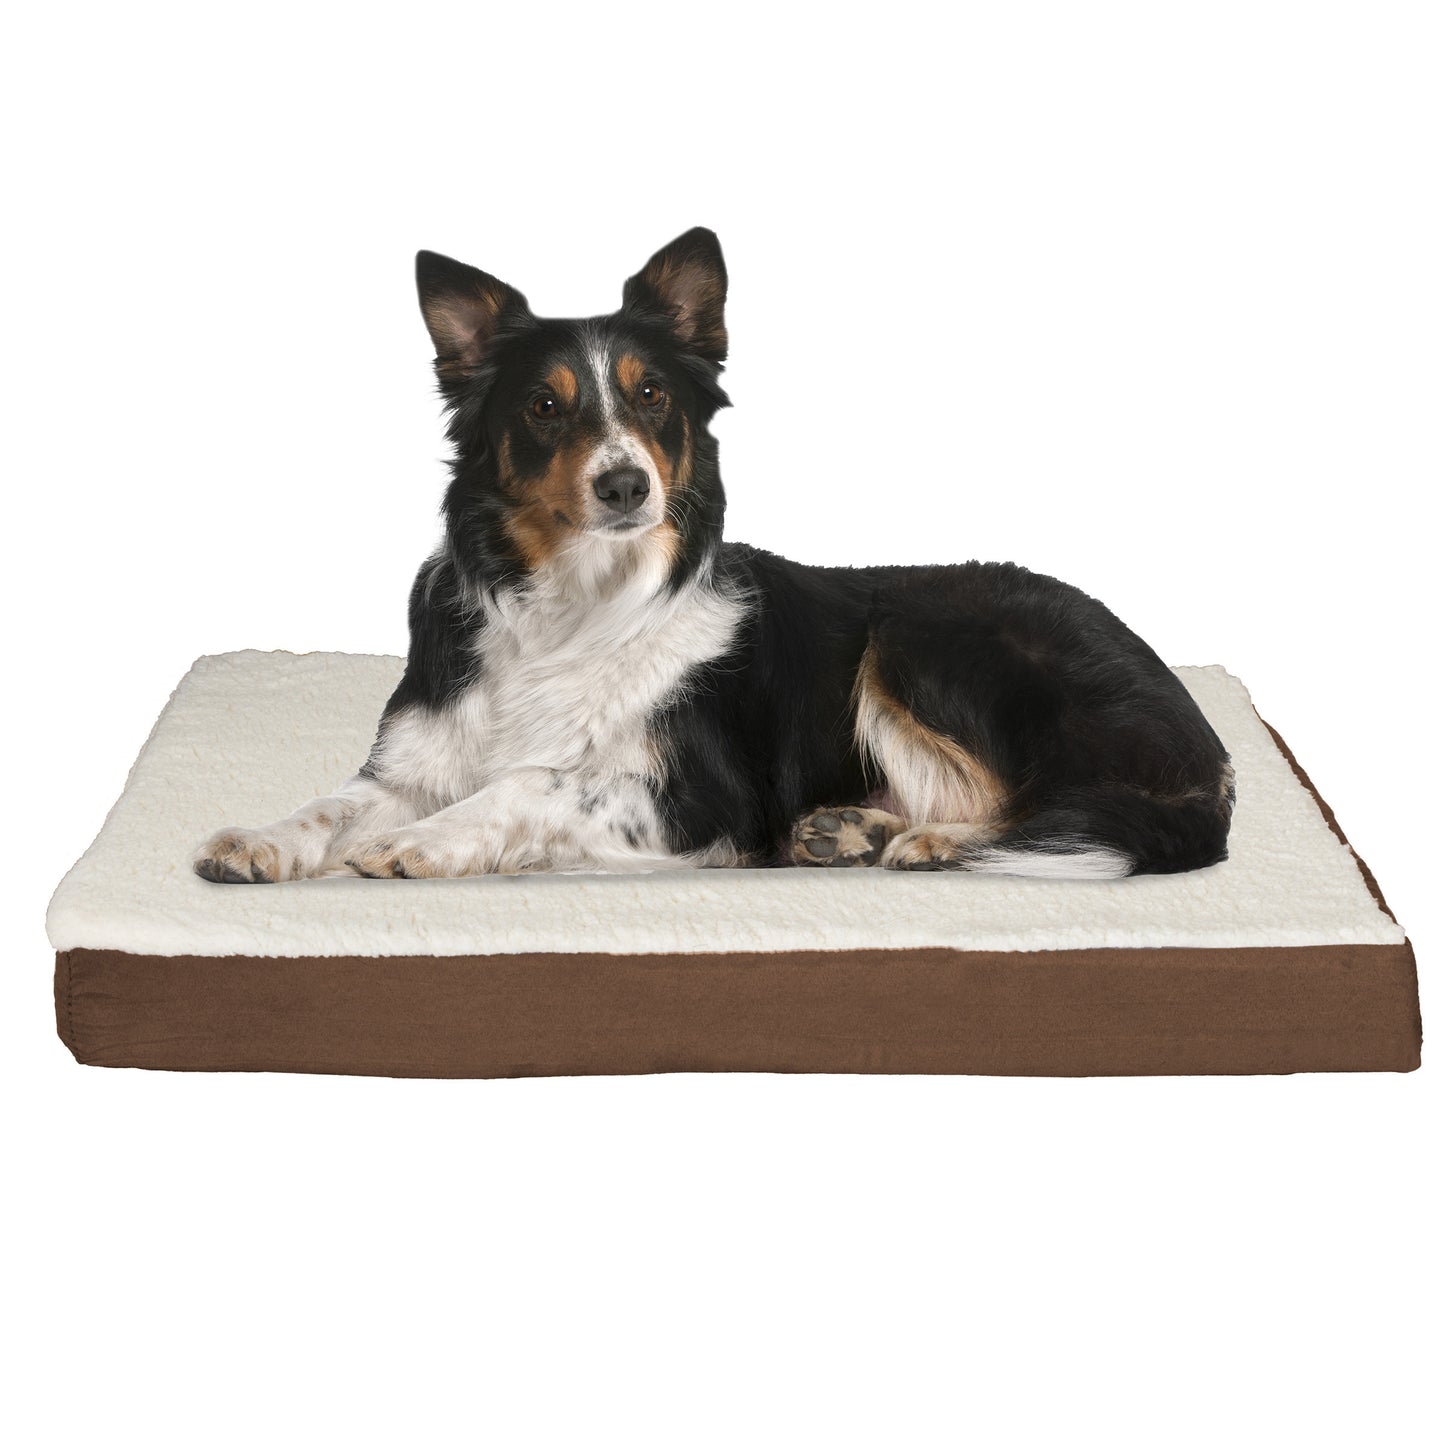 2-Layer Orthopedic Dog Bed